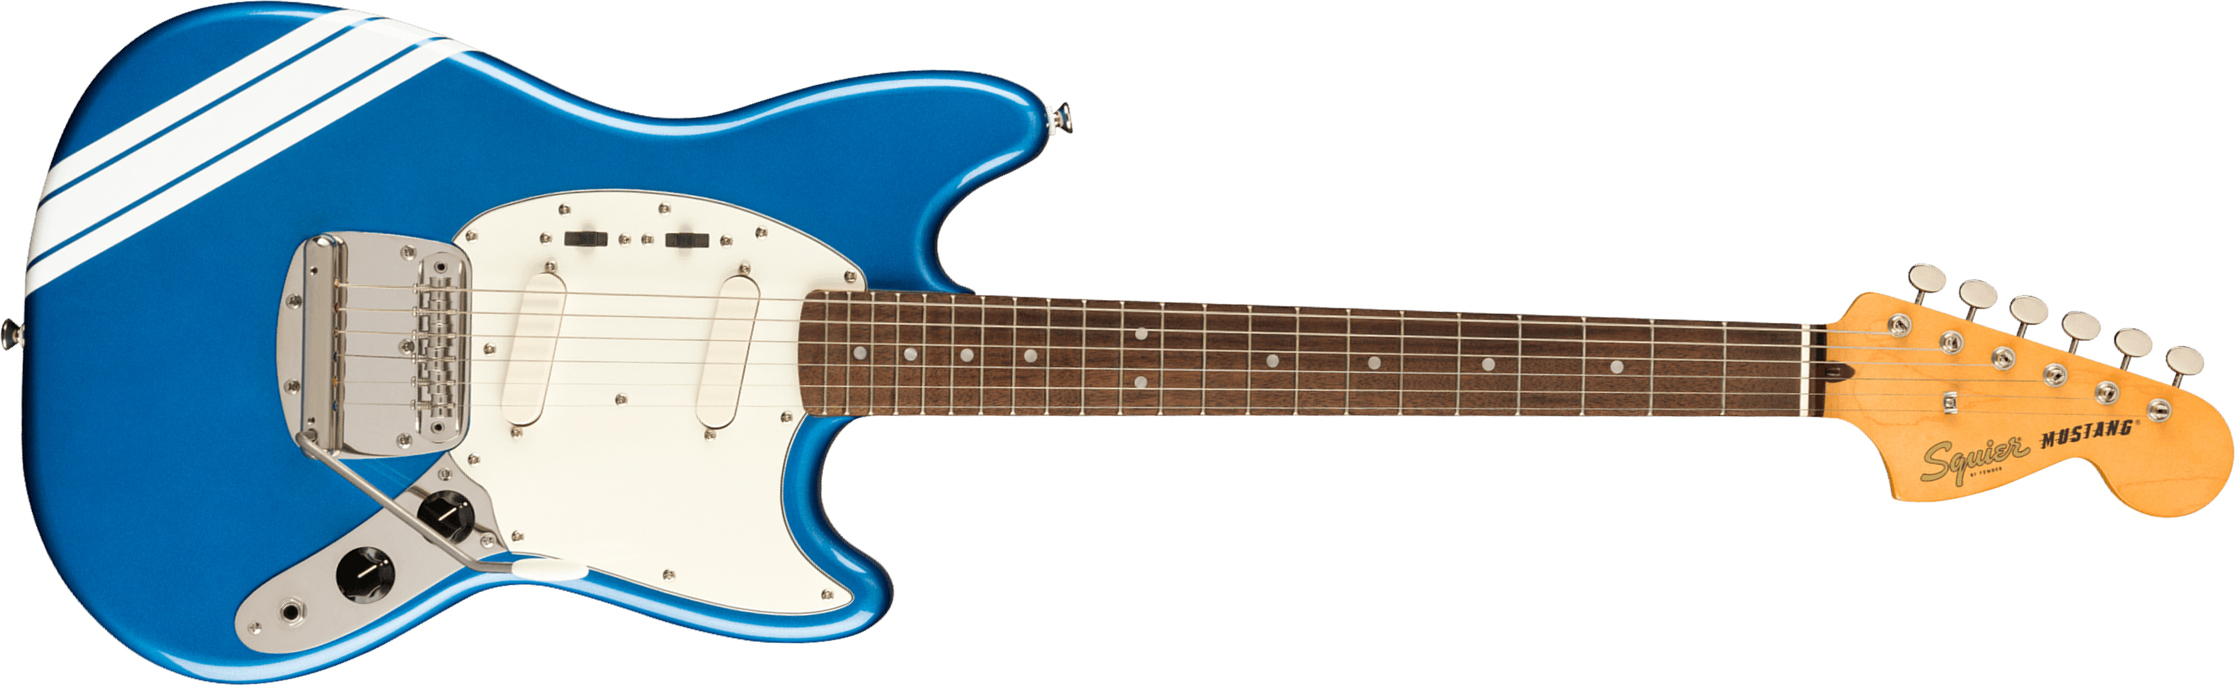 Squier Mustang  Classic Vibe 60s Competition Fsr Ltd Lau - Lake Placid Blue W/ Olympic White Stripes - Retro-rock elektrische gitaar - Main picture